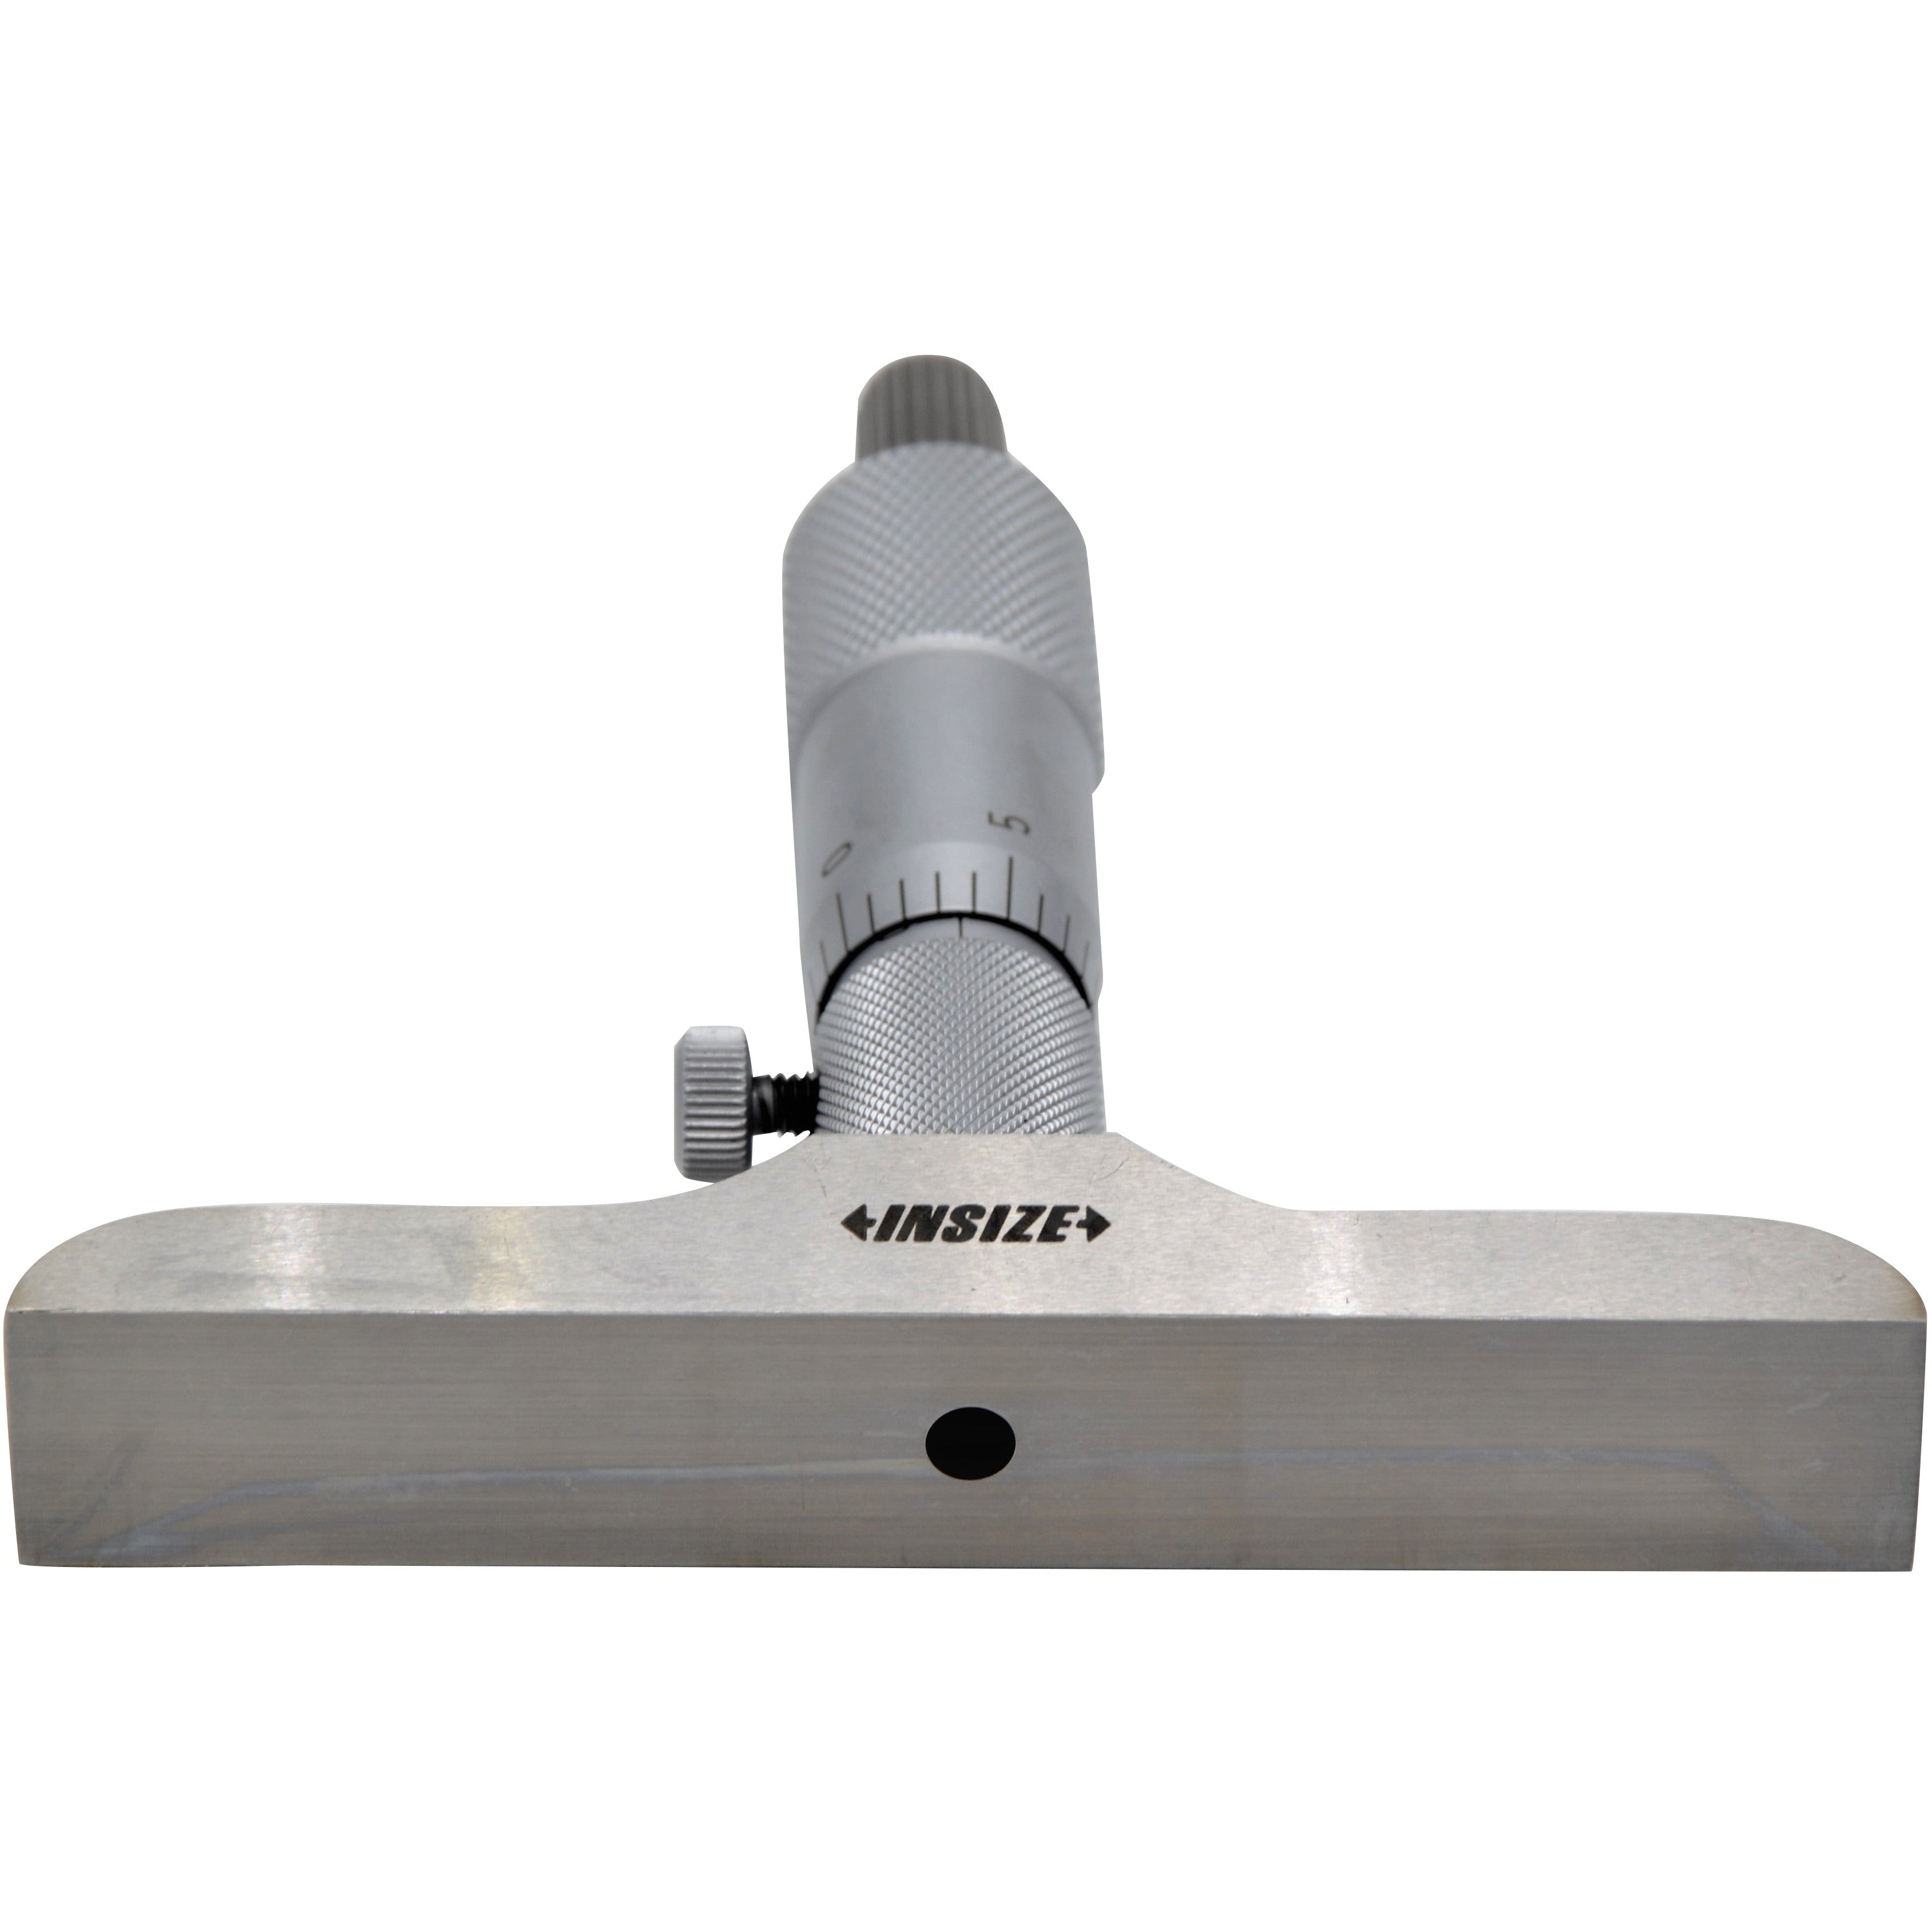 Insize Imperial Depth Micrometer 0-4" Range Series 3240 - 4